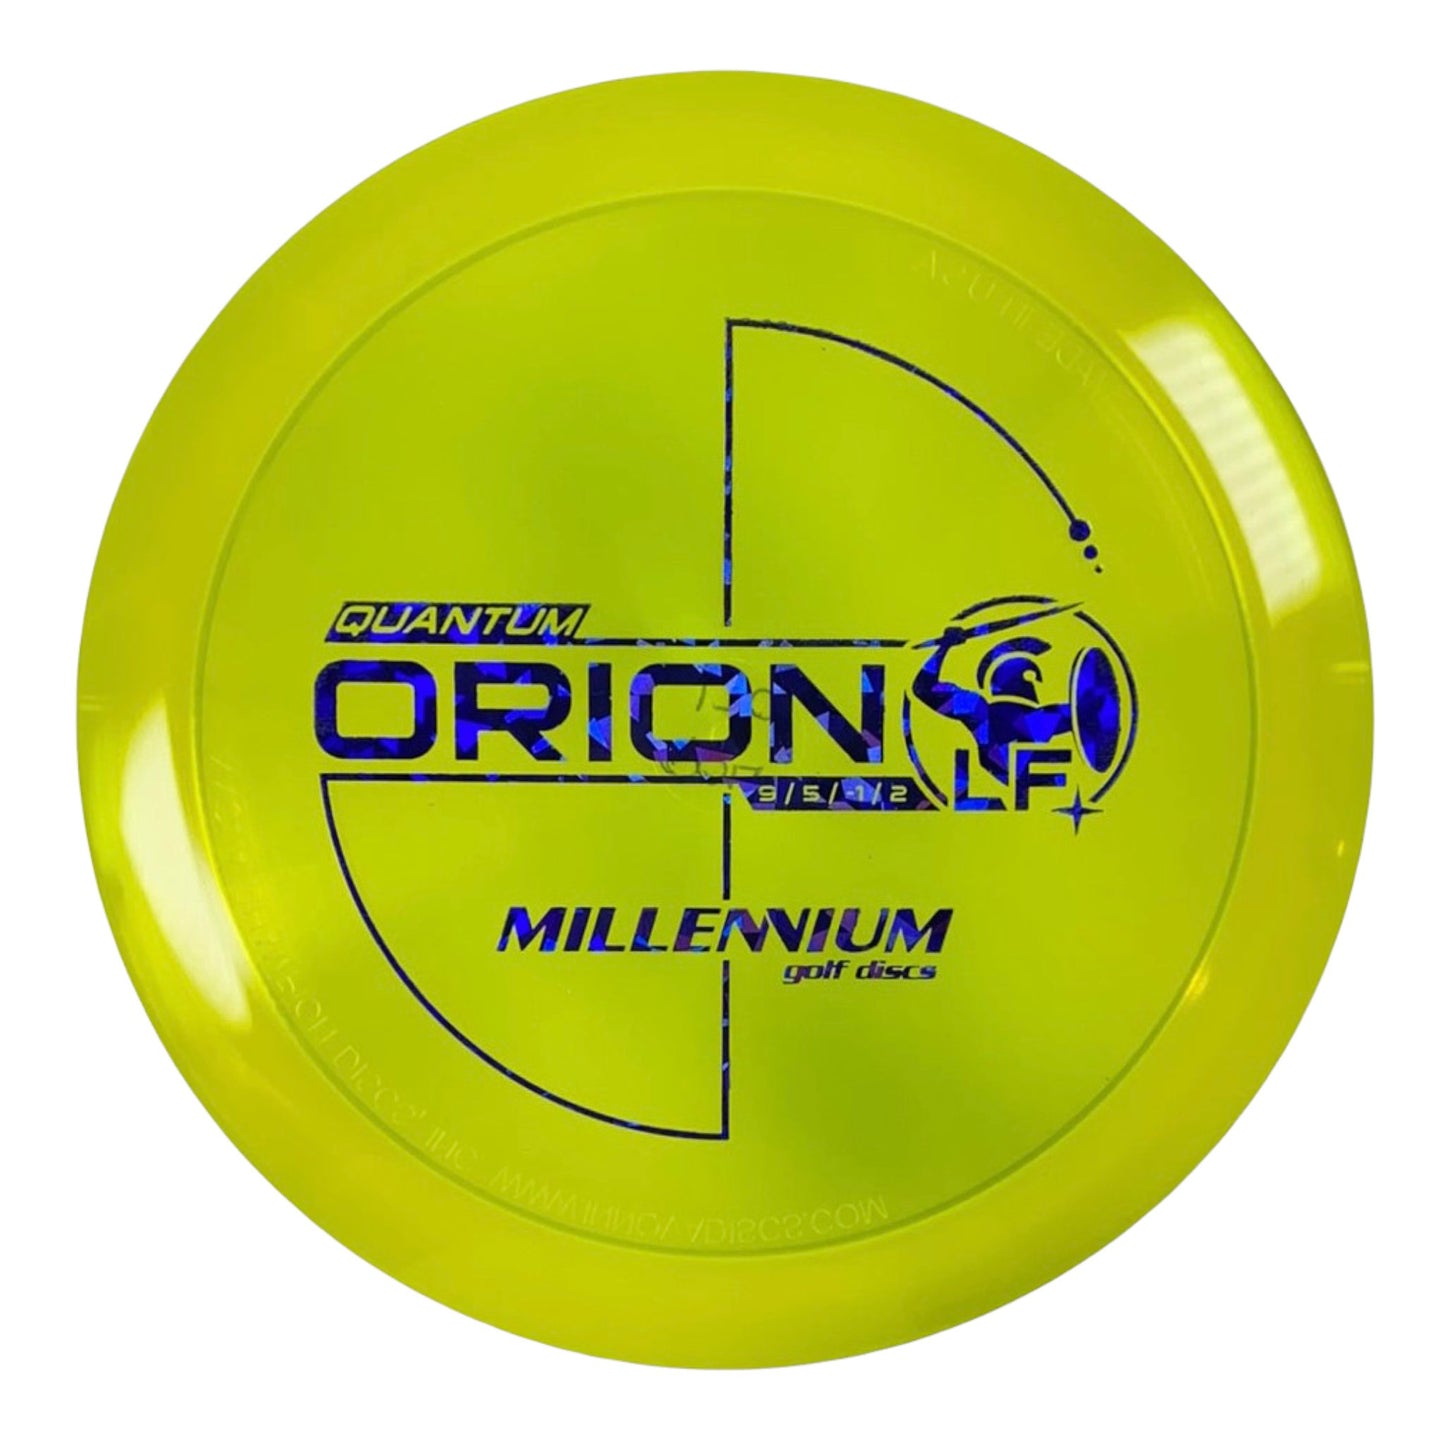 Millennium Golf Discs Orion LF | Quantum | Yellow/Blue 170g Disc Golf